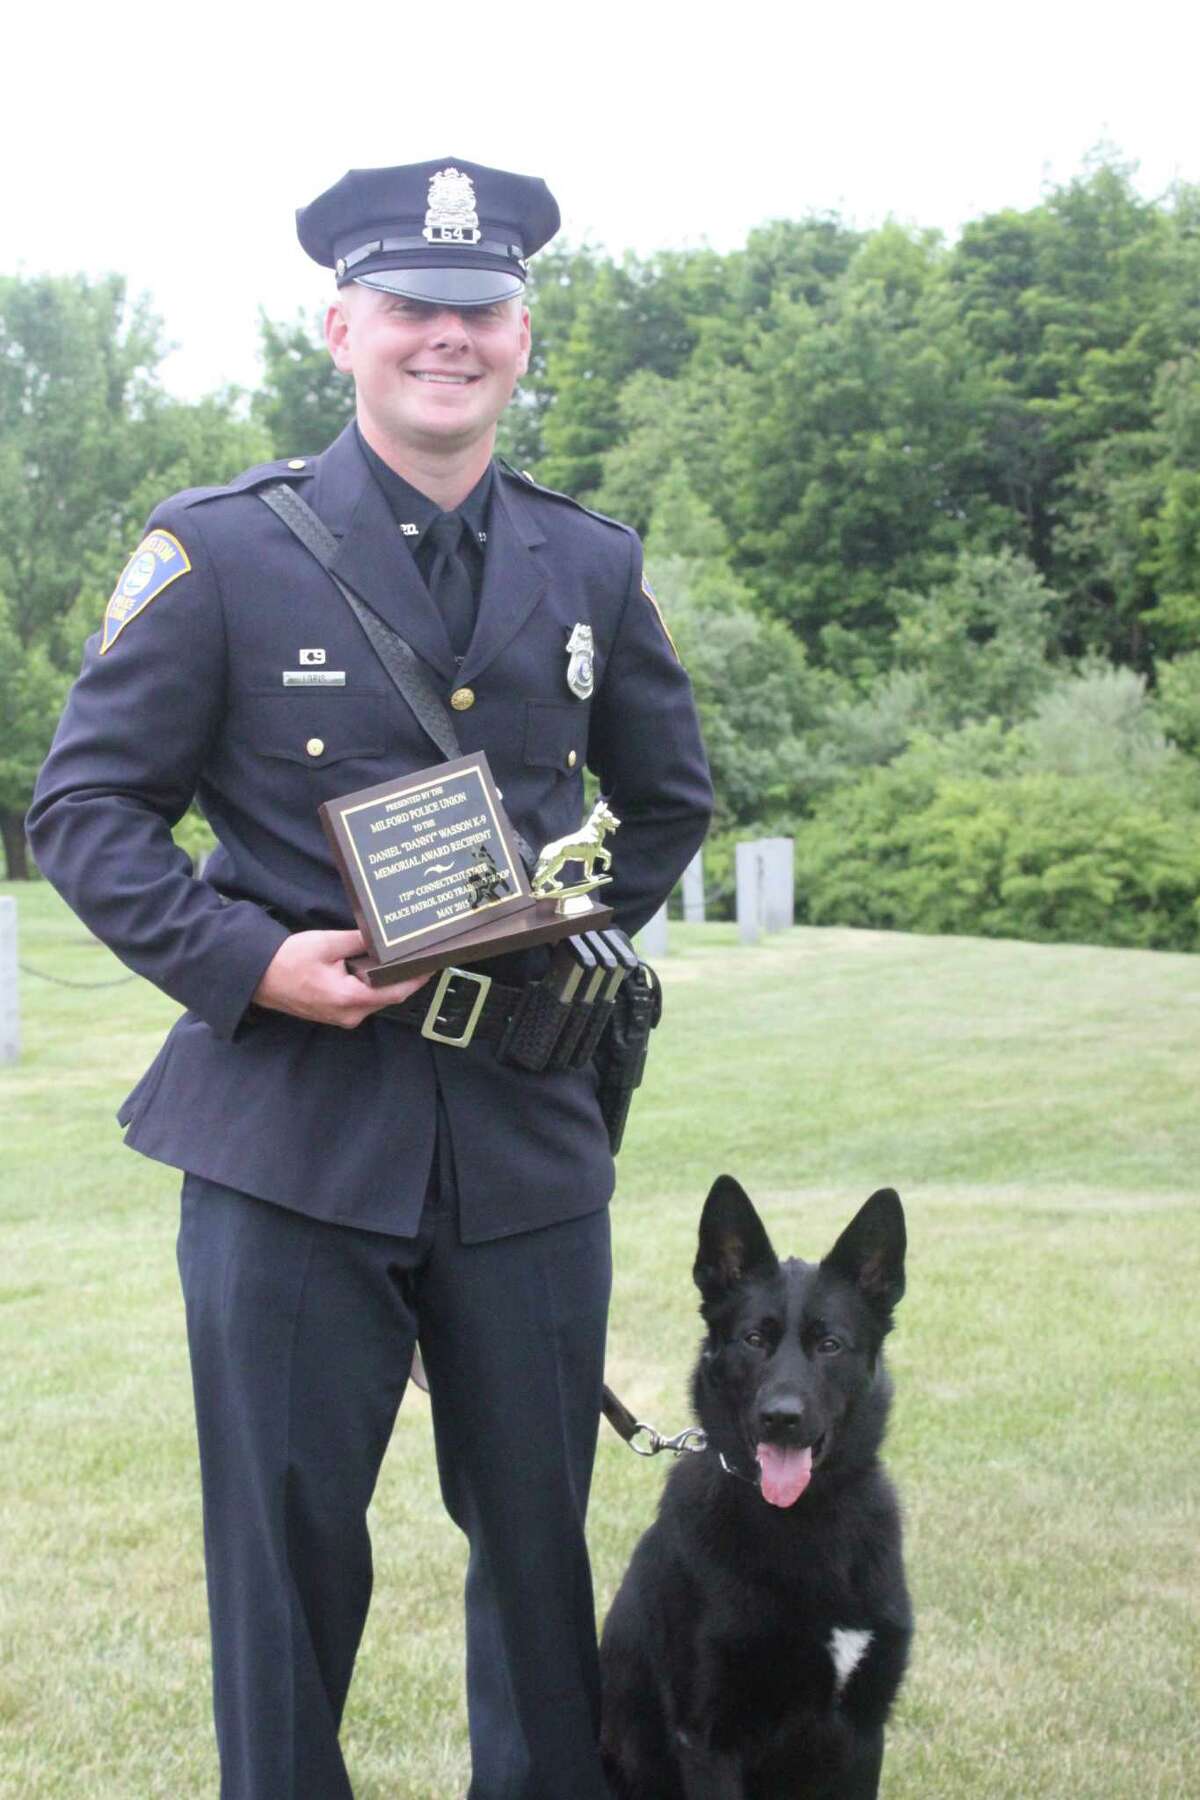 Shelton Officer Dan Loris and his K-9 partner Stryker received the Dan Wasson Memorial Award at their graduation in 2015.